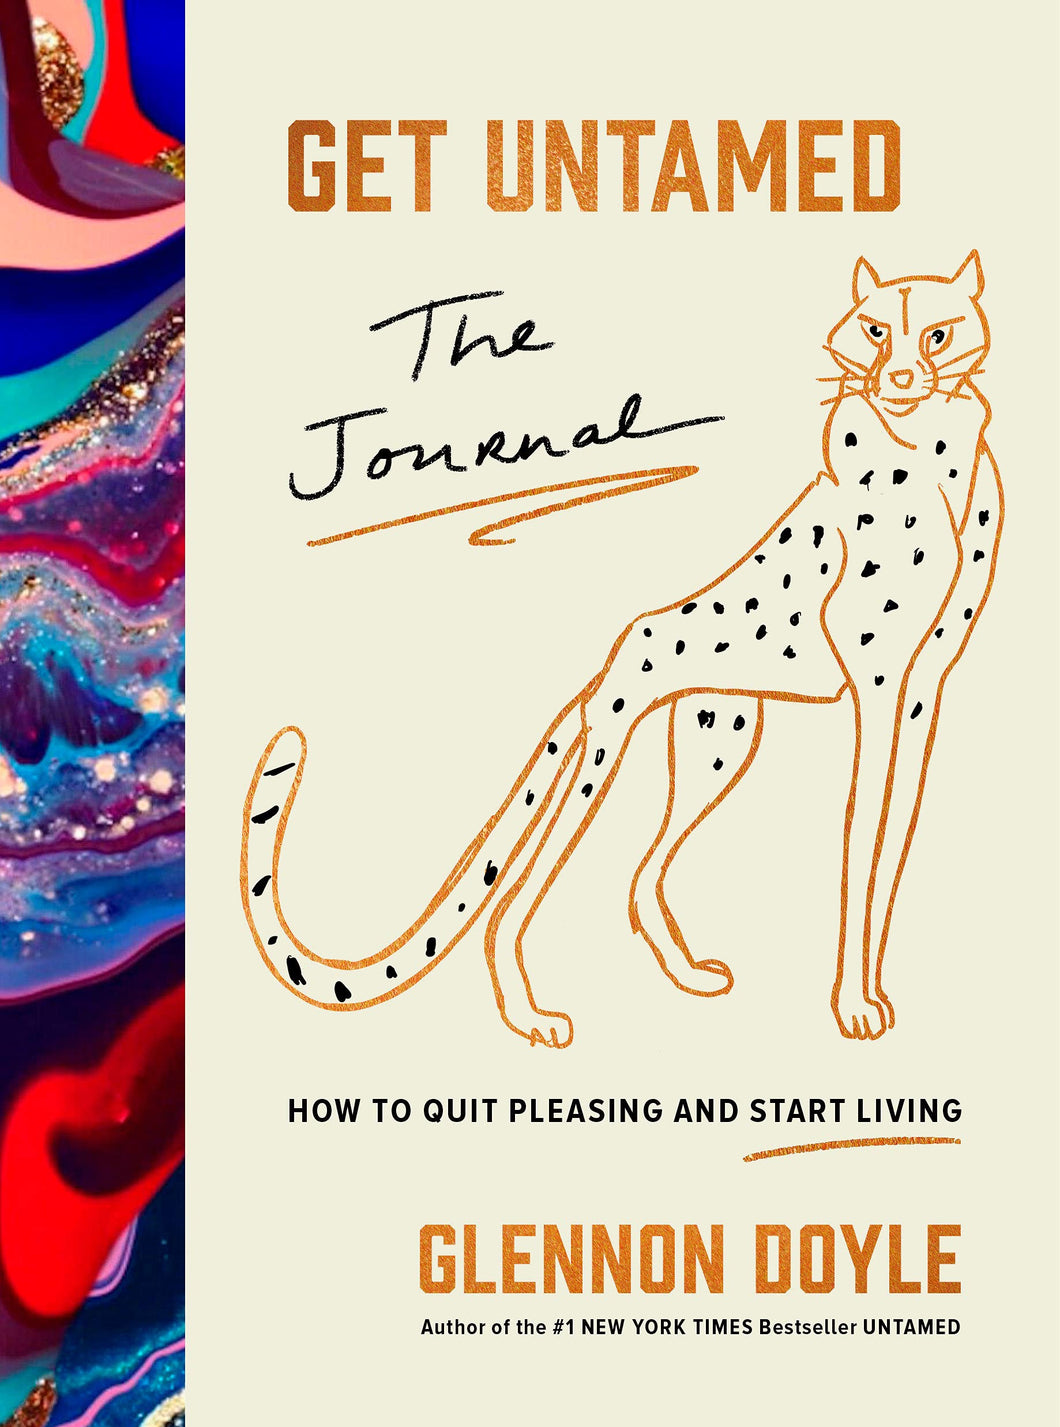 Get Untamed: The Journal